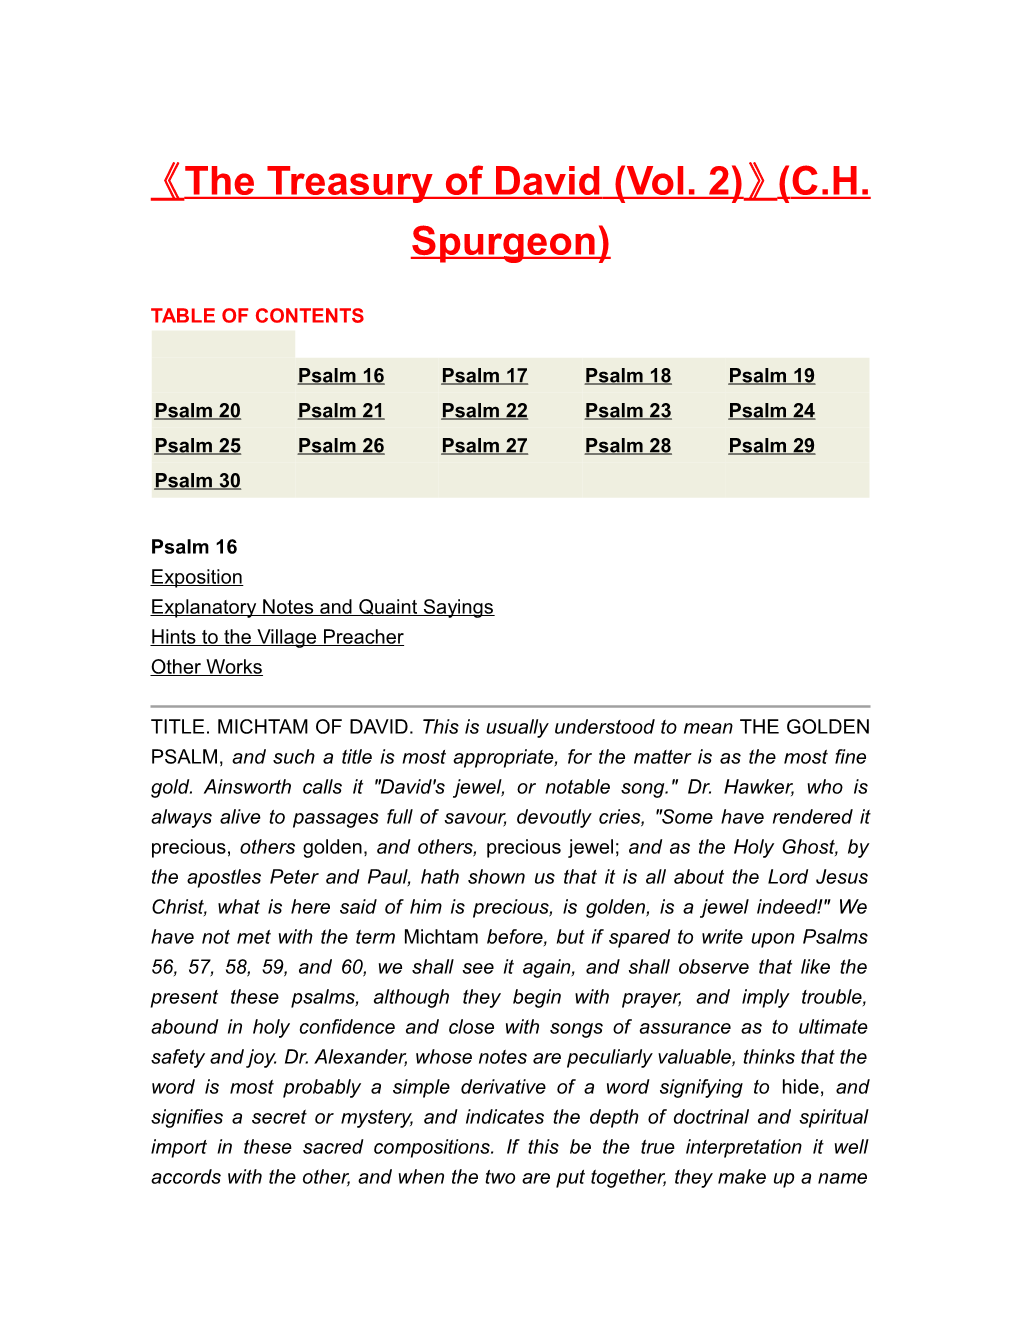 The Treasury of David (Vol. 2) (C.H. Spurgeon)